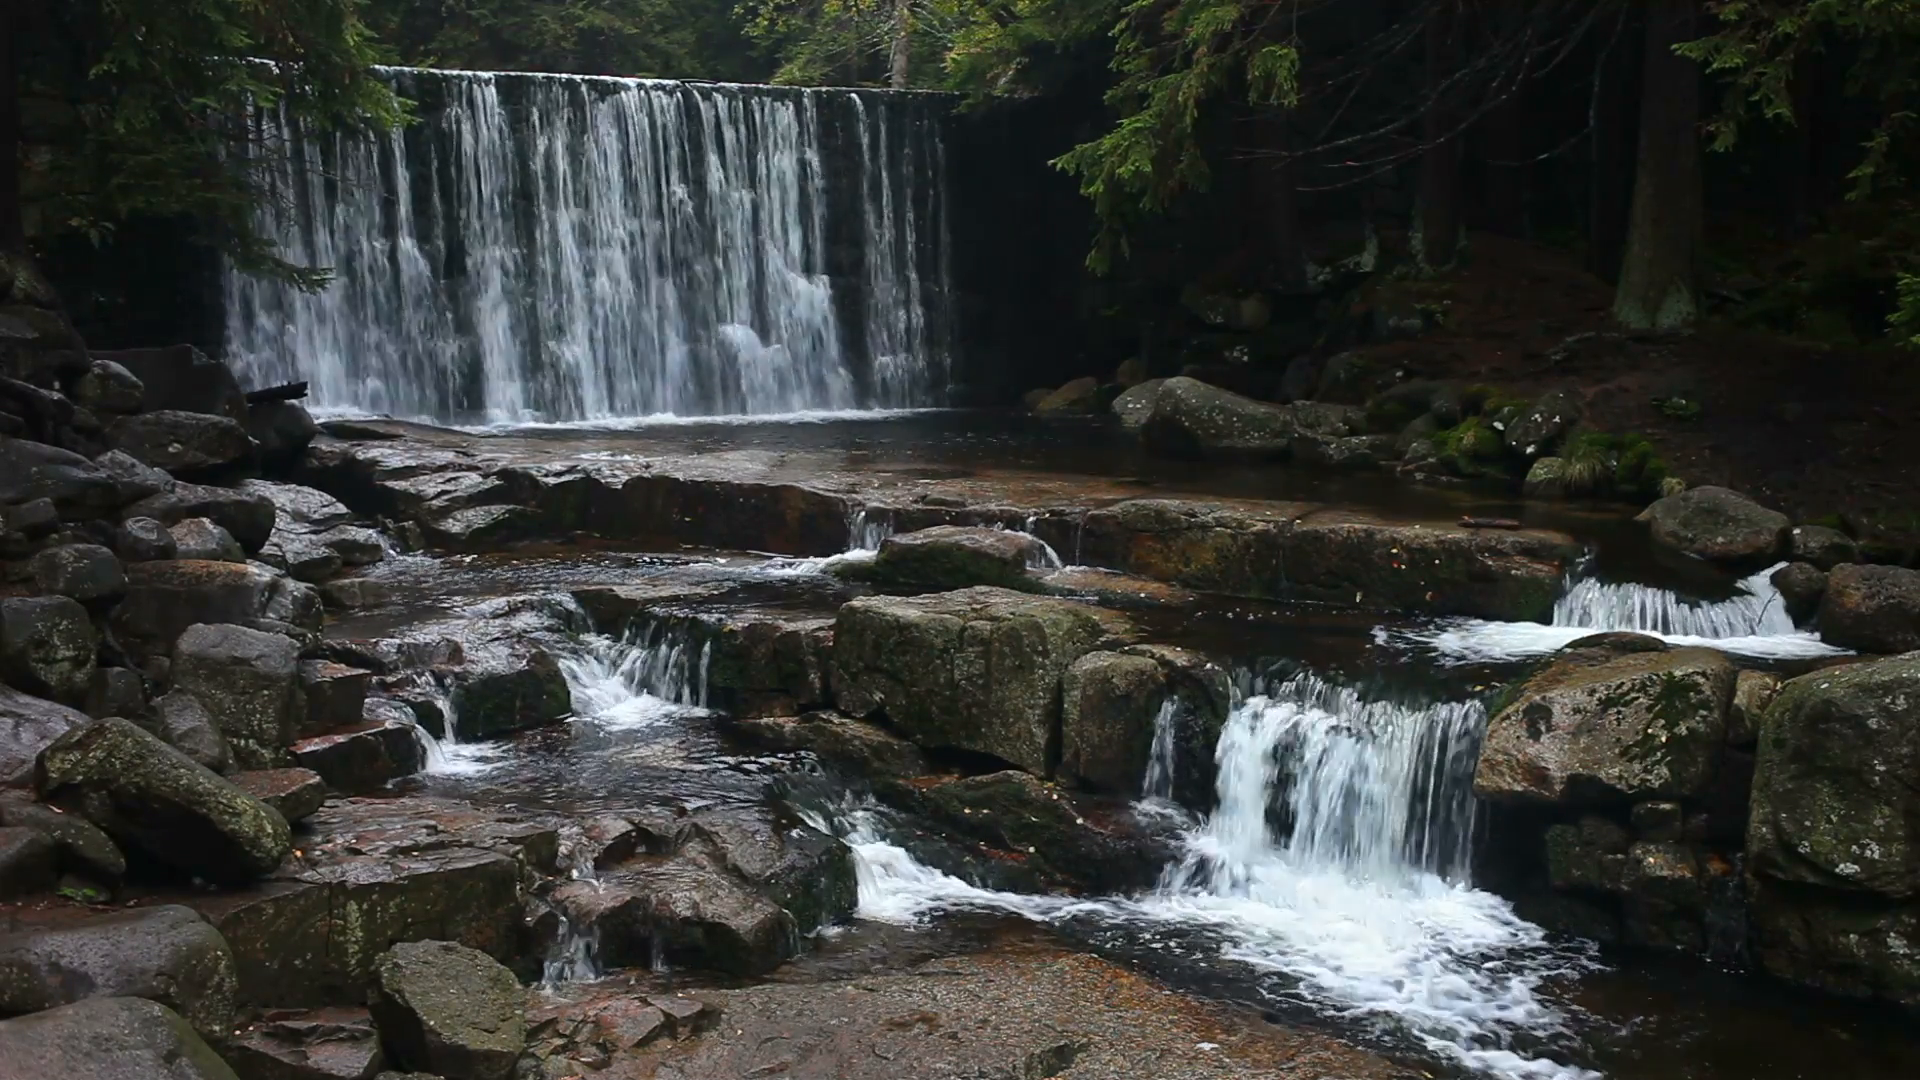 Wild Waterfall in Mountain Forest Stock Video Footage - VideoBlocks